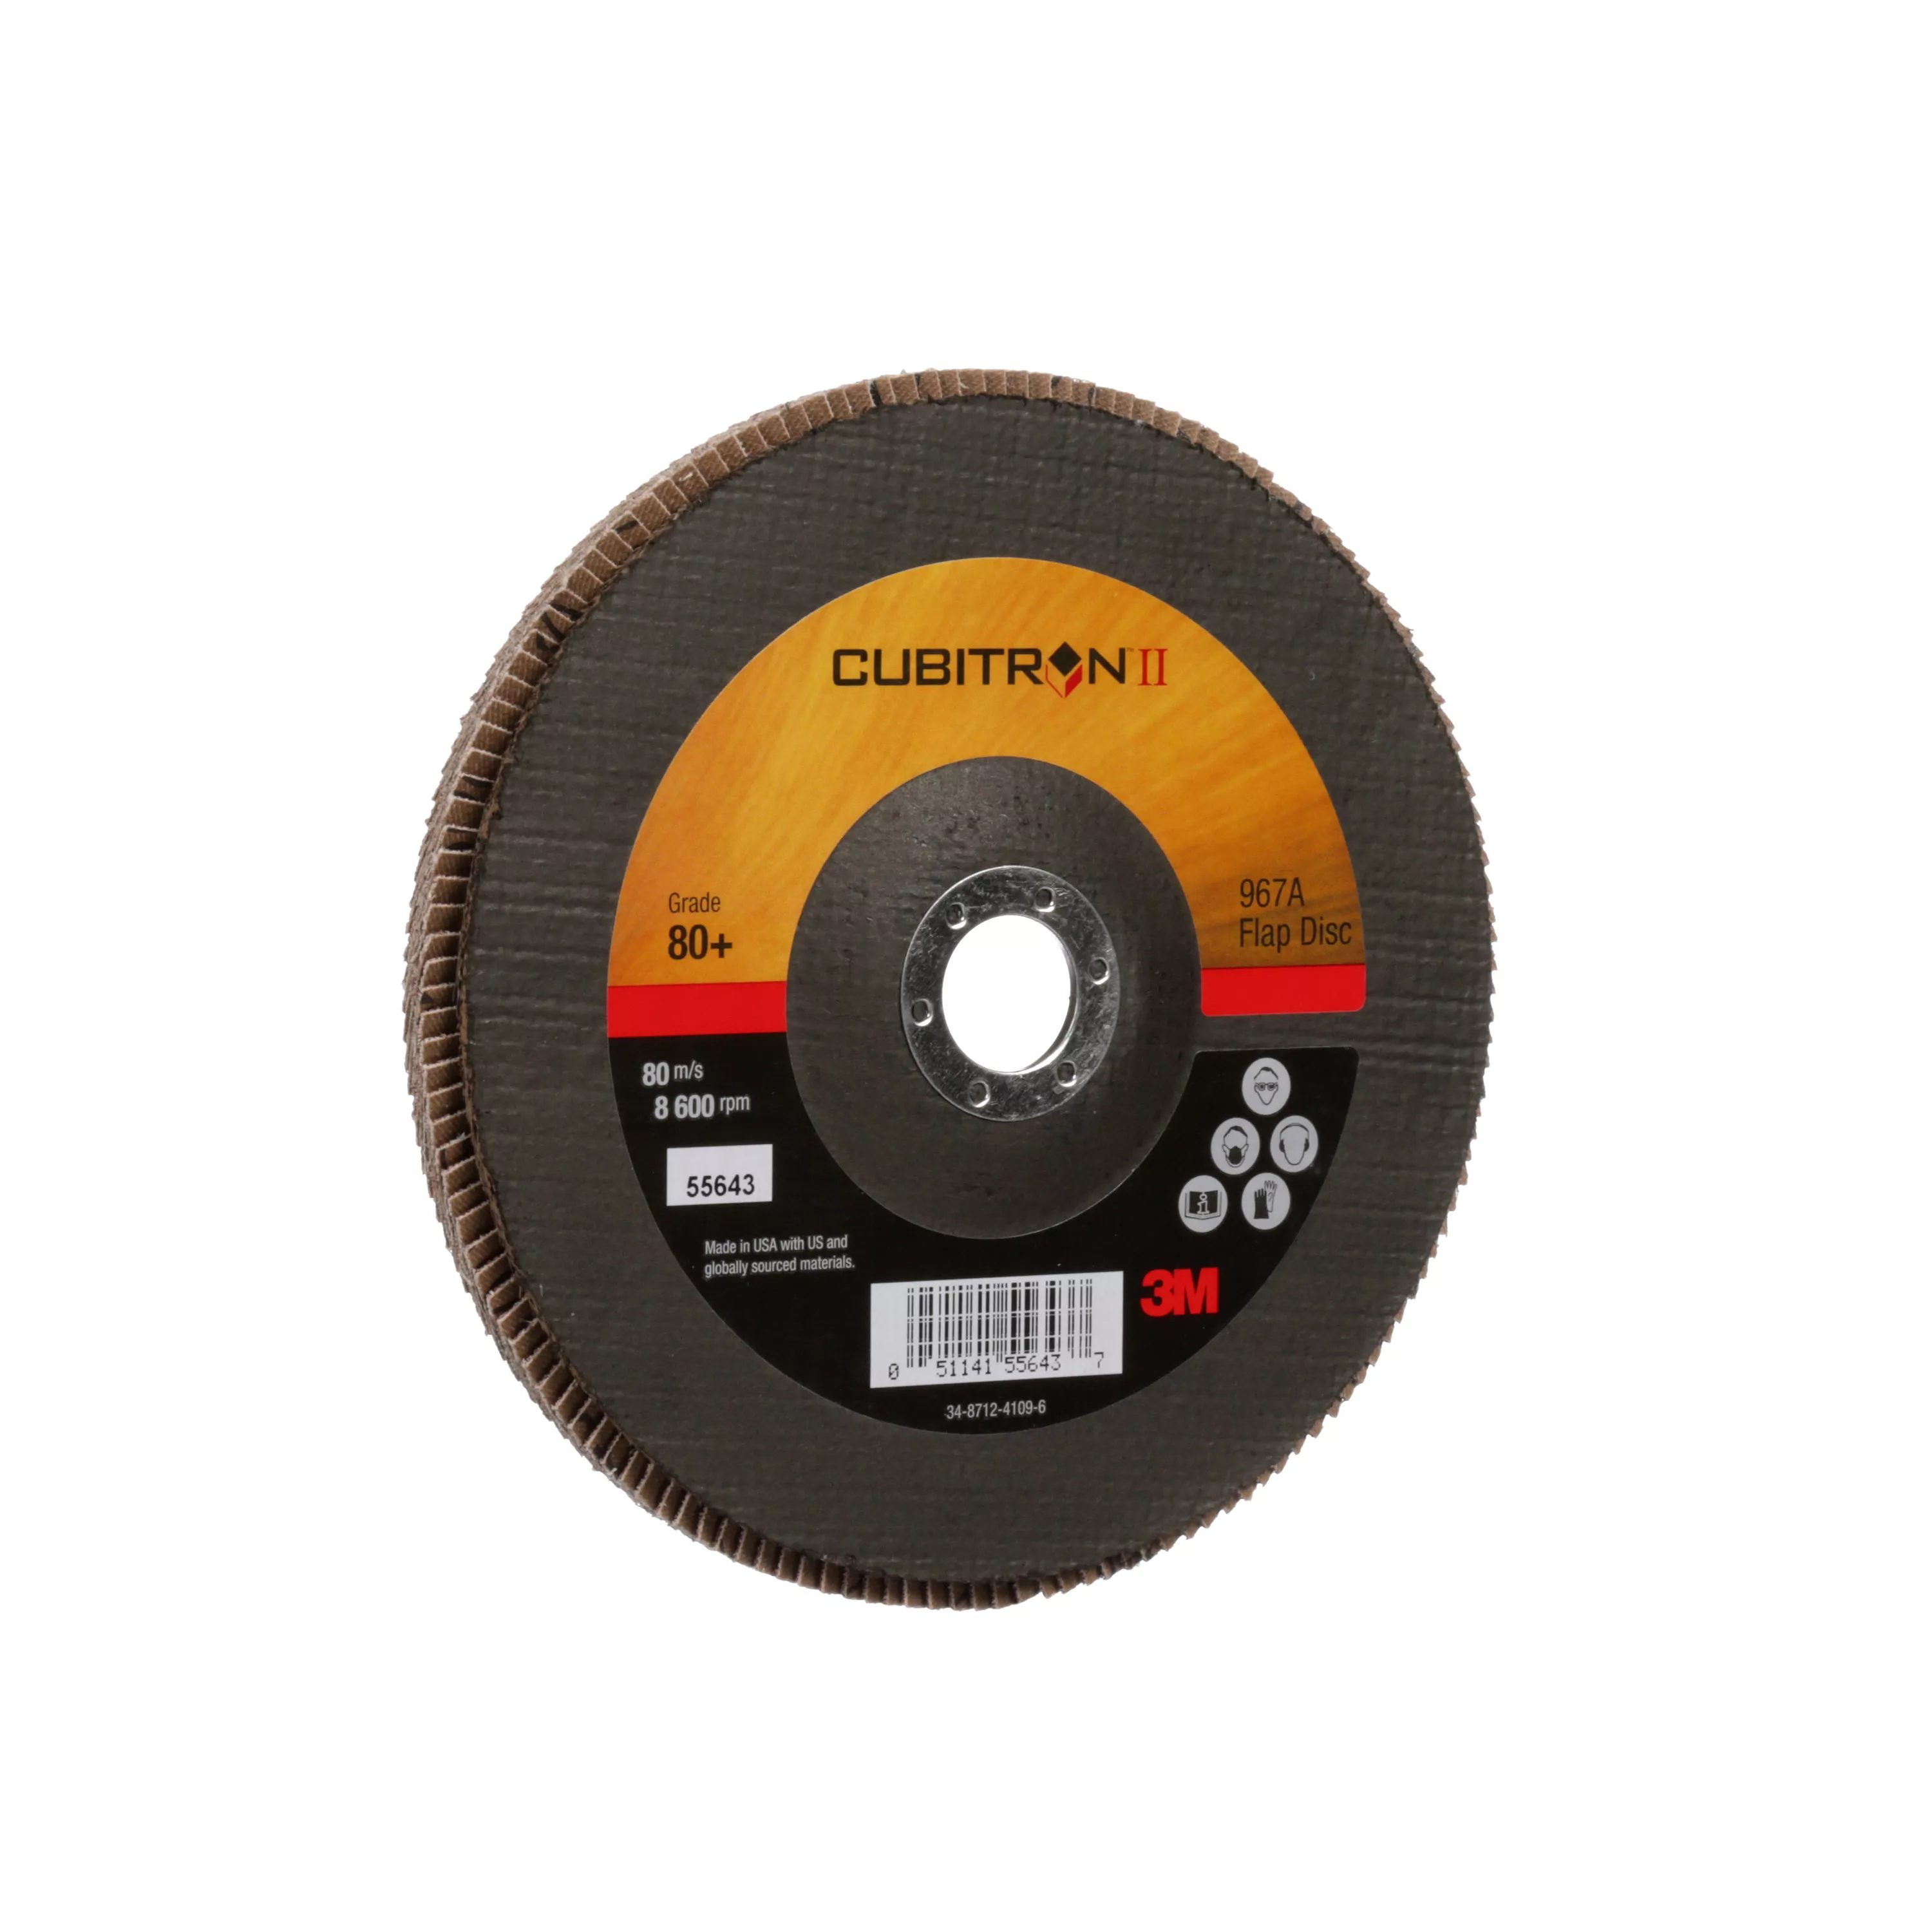 SKU 7010327064 | 3M™ Cubitron™ II Flap Disc 967A